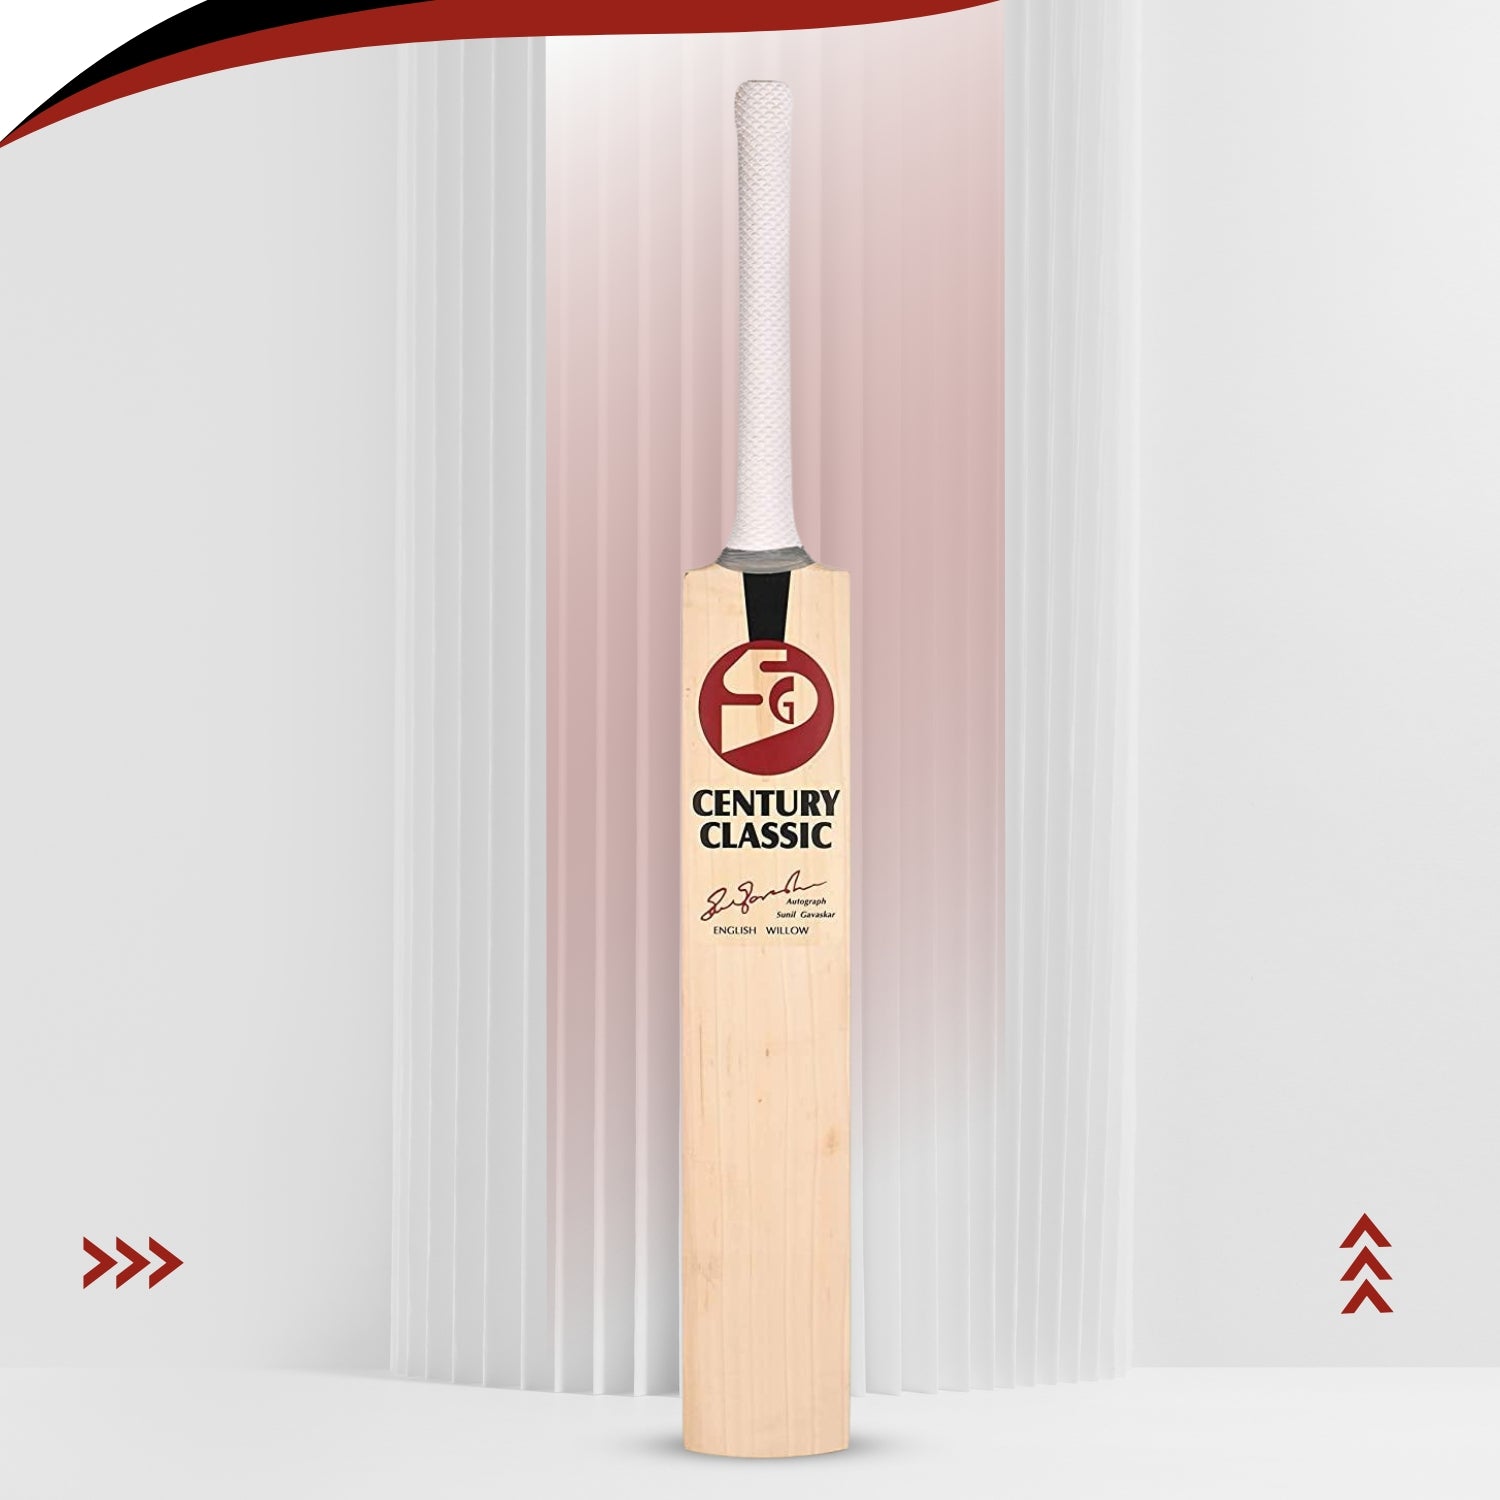 SG Cricket Bat Century Classic - Best Price online Prokicksports.com